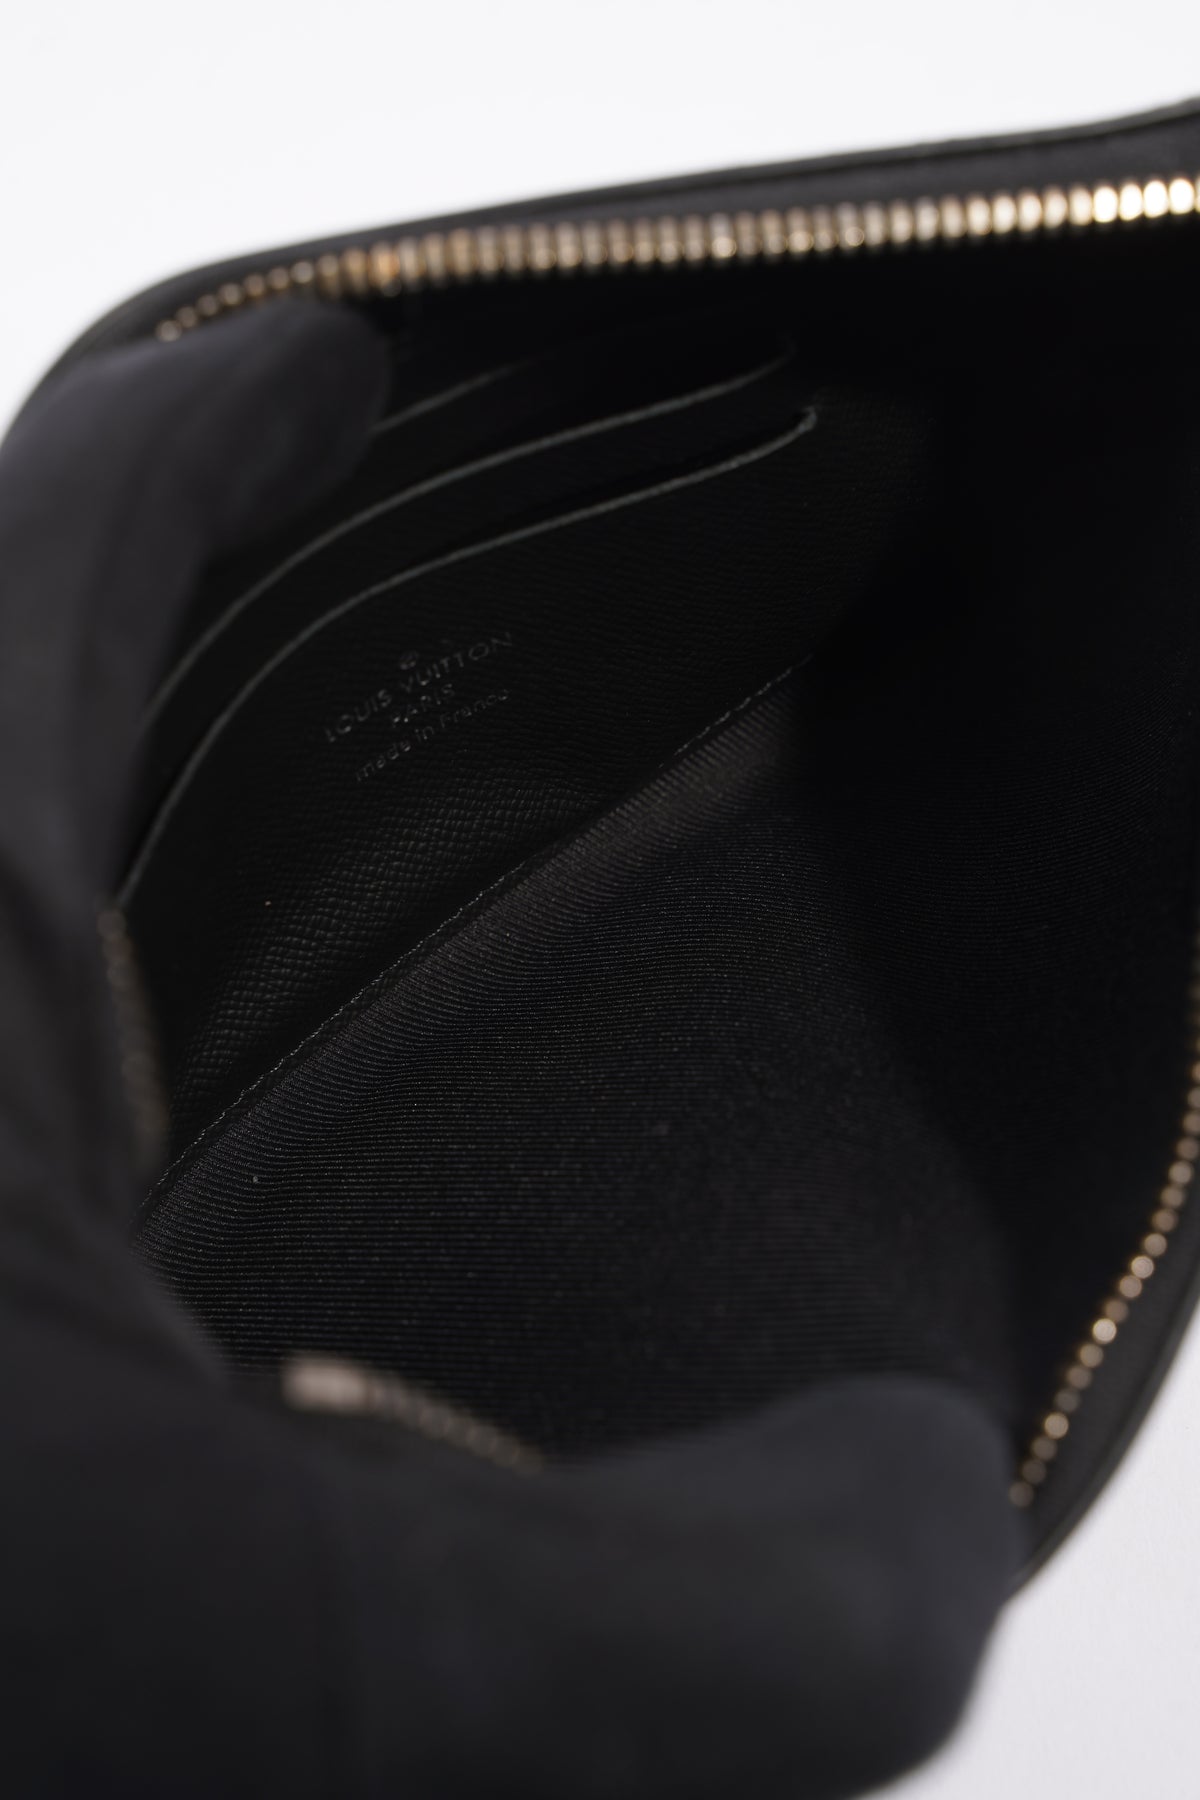 Louis Vuitton Discovery Pochette Monogram Shadow Leather PM Black 11748571